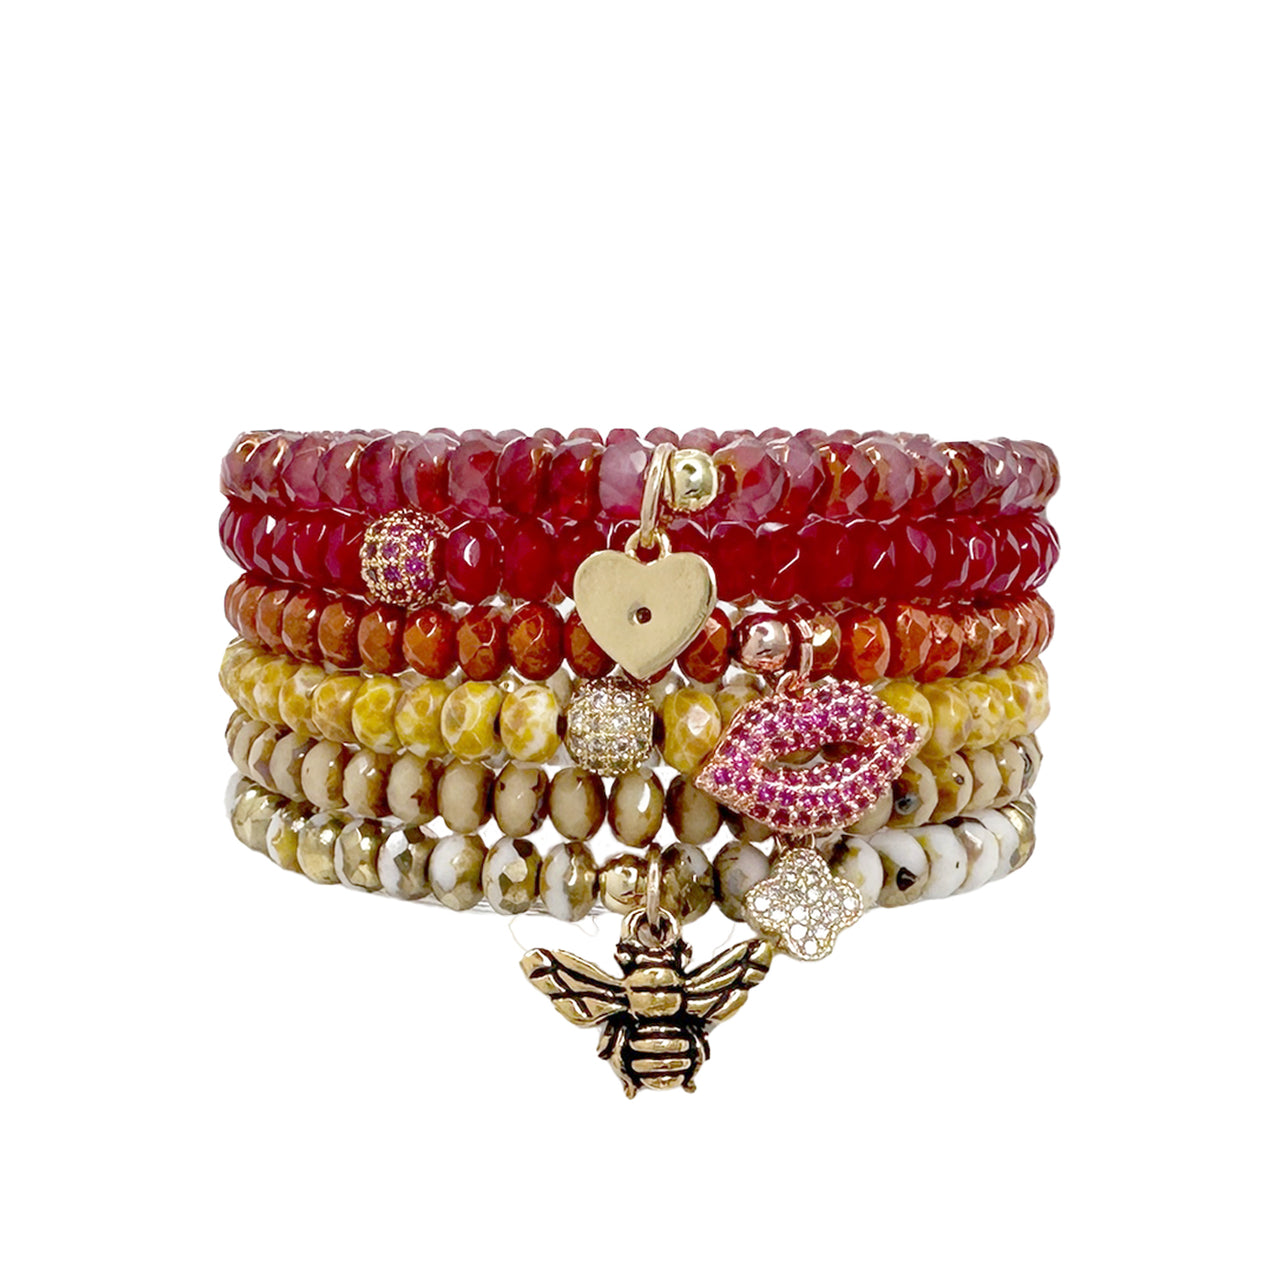 Harper Bliss Collection of Bracelets